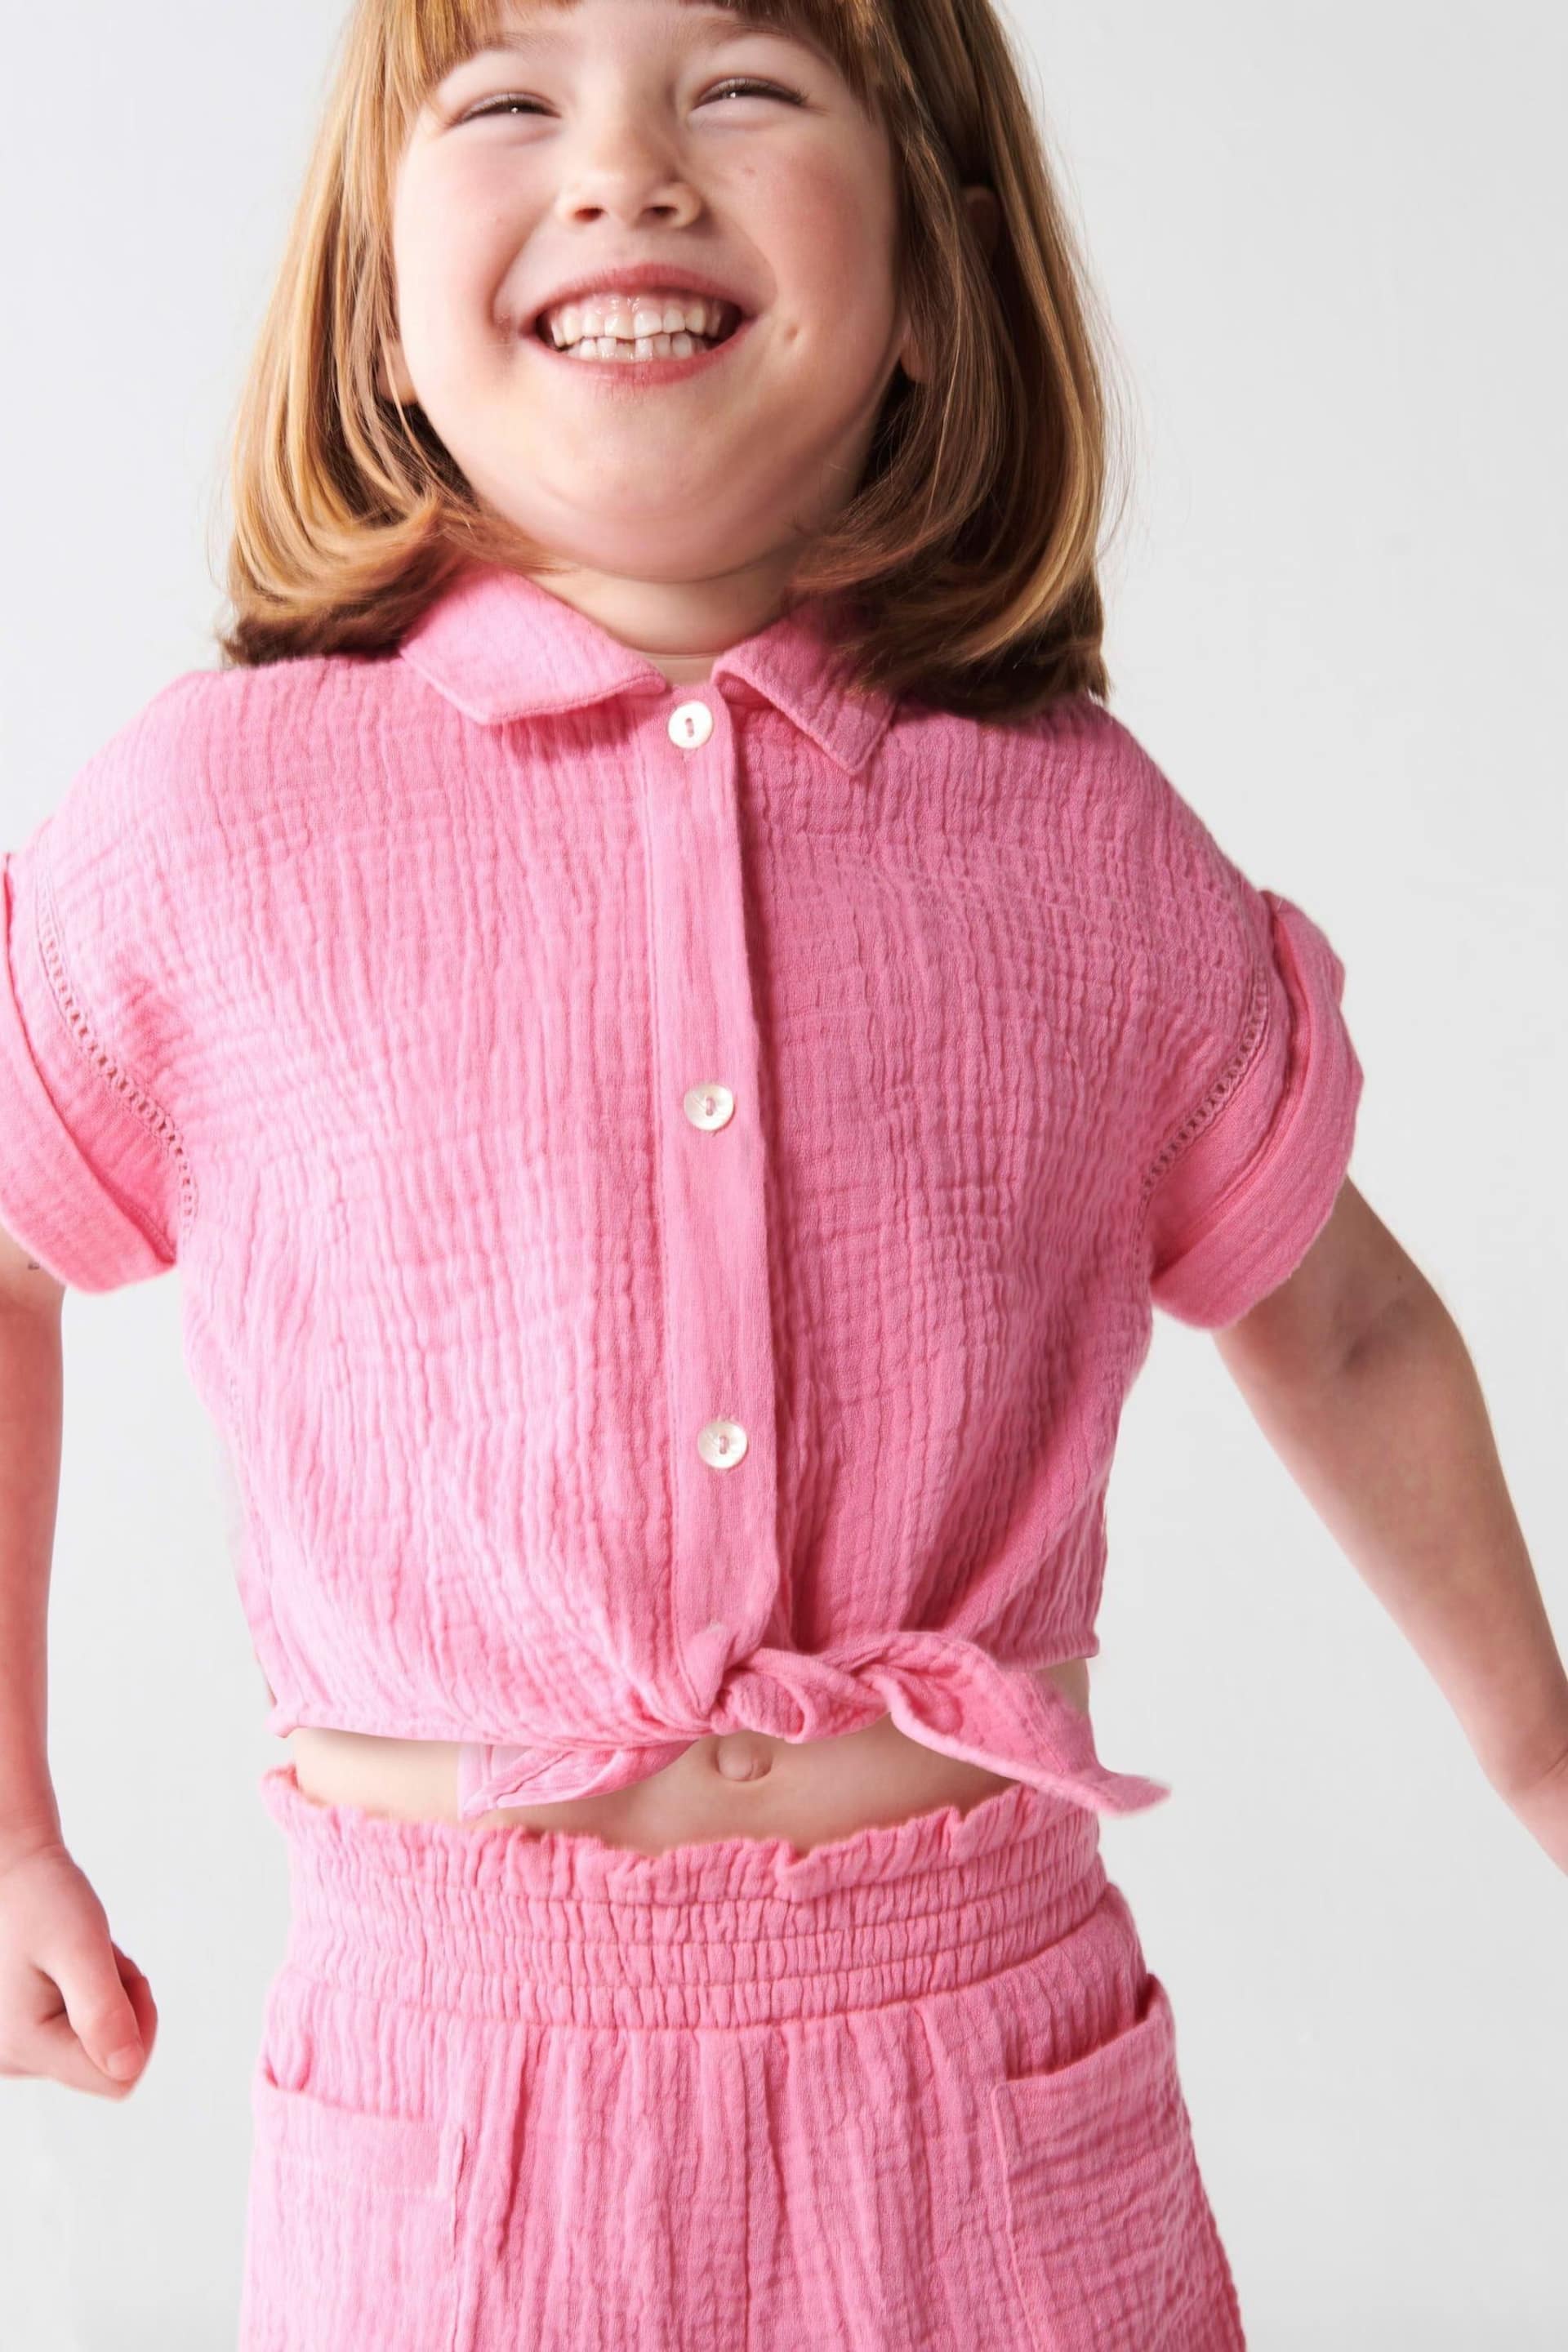 River Island Pink Girls Shirt and Shorts Set - Image 3 of 3